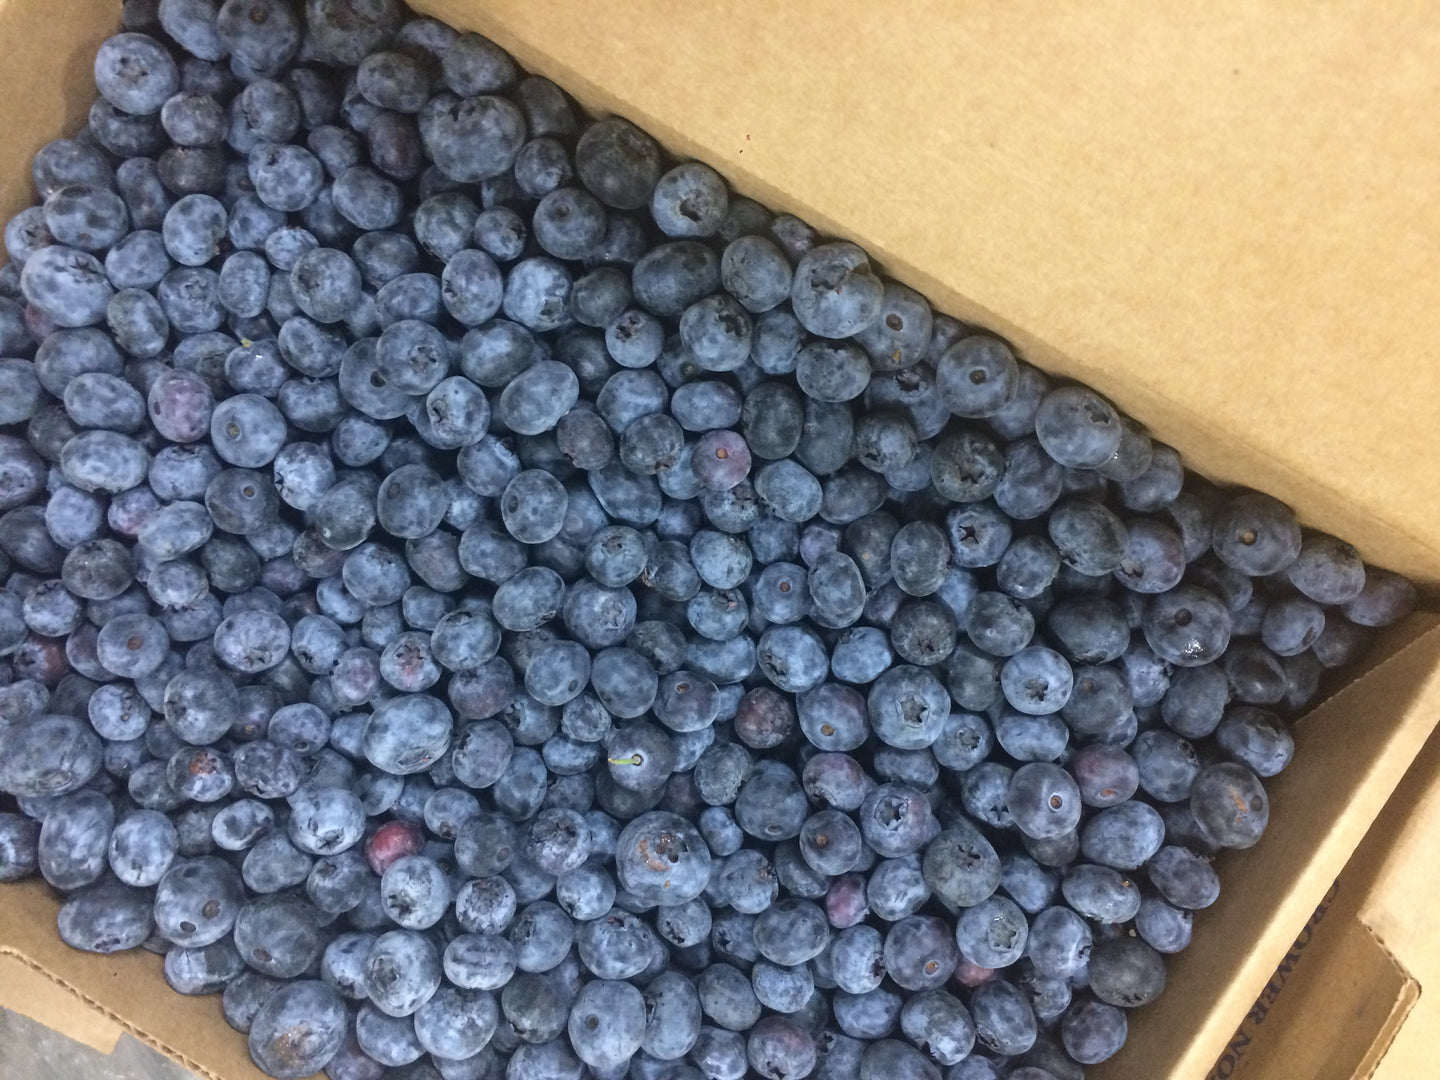 Pre-Order 10lb Box of Blueberries for Pickup